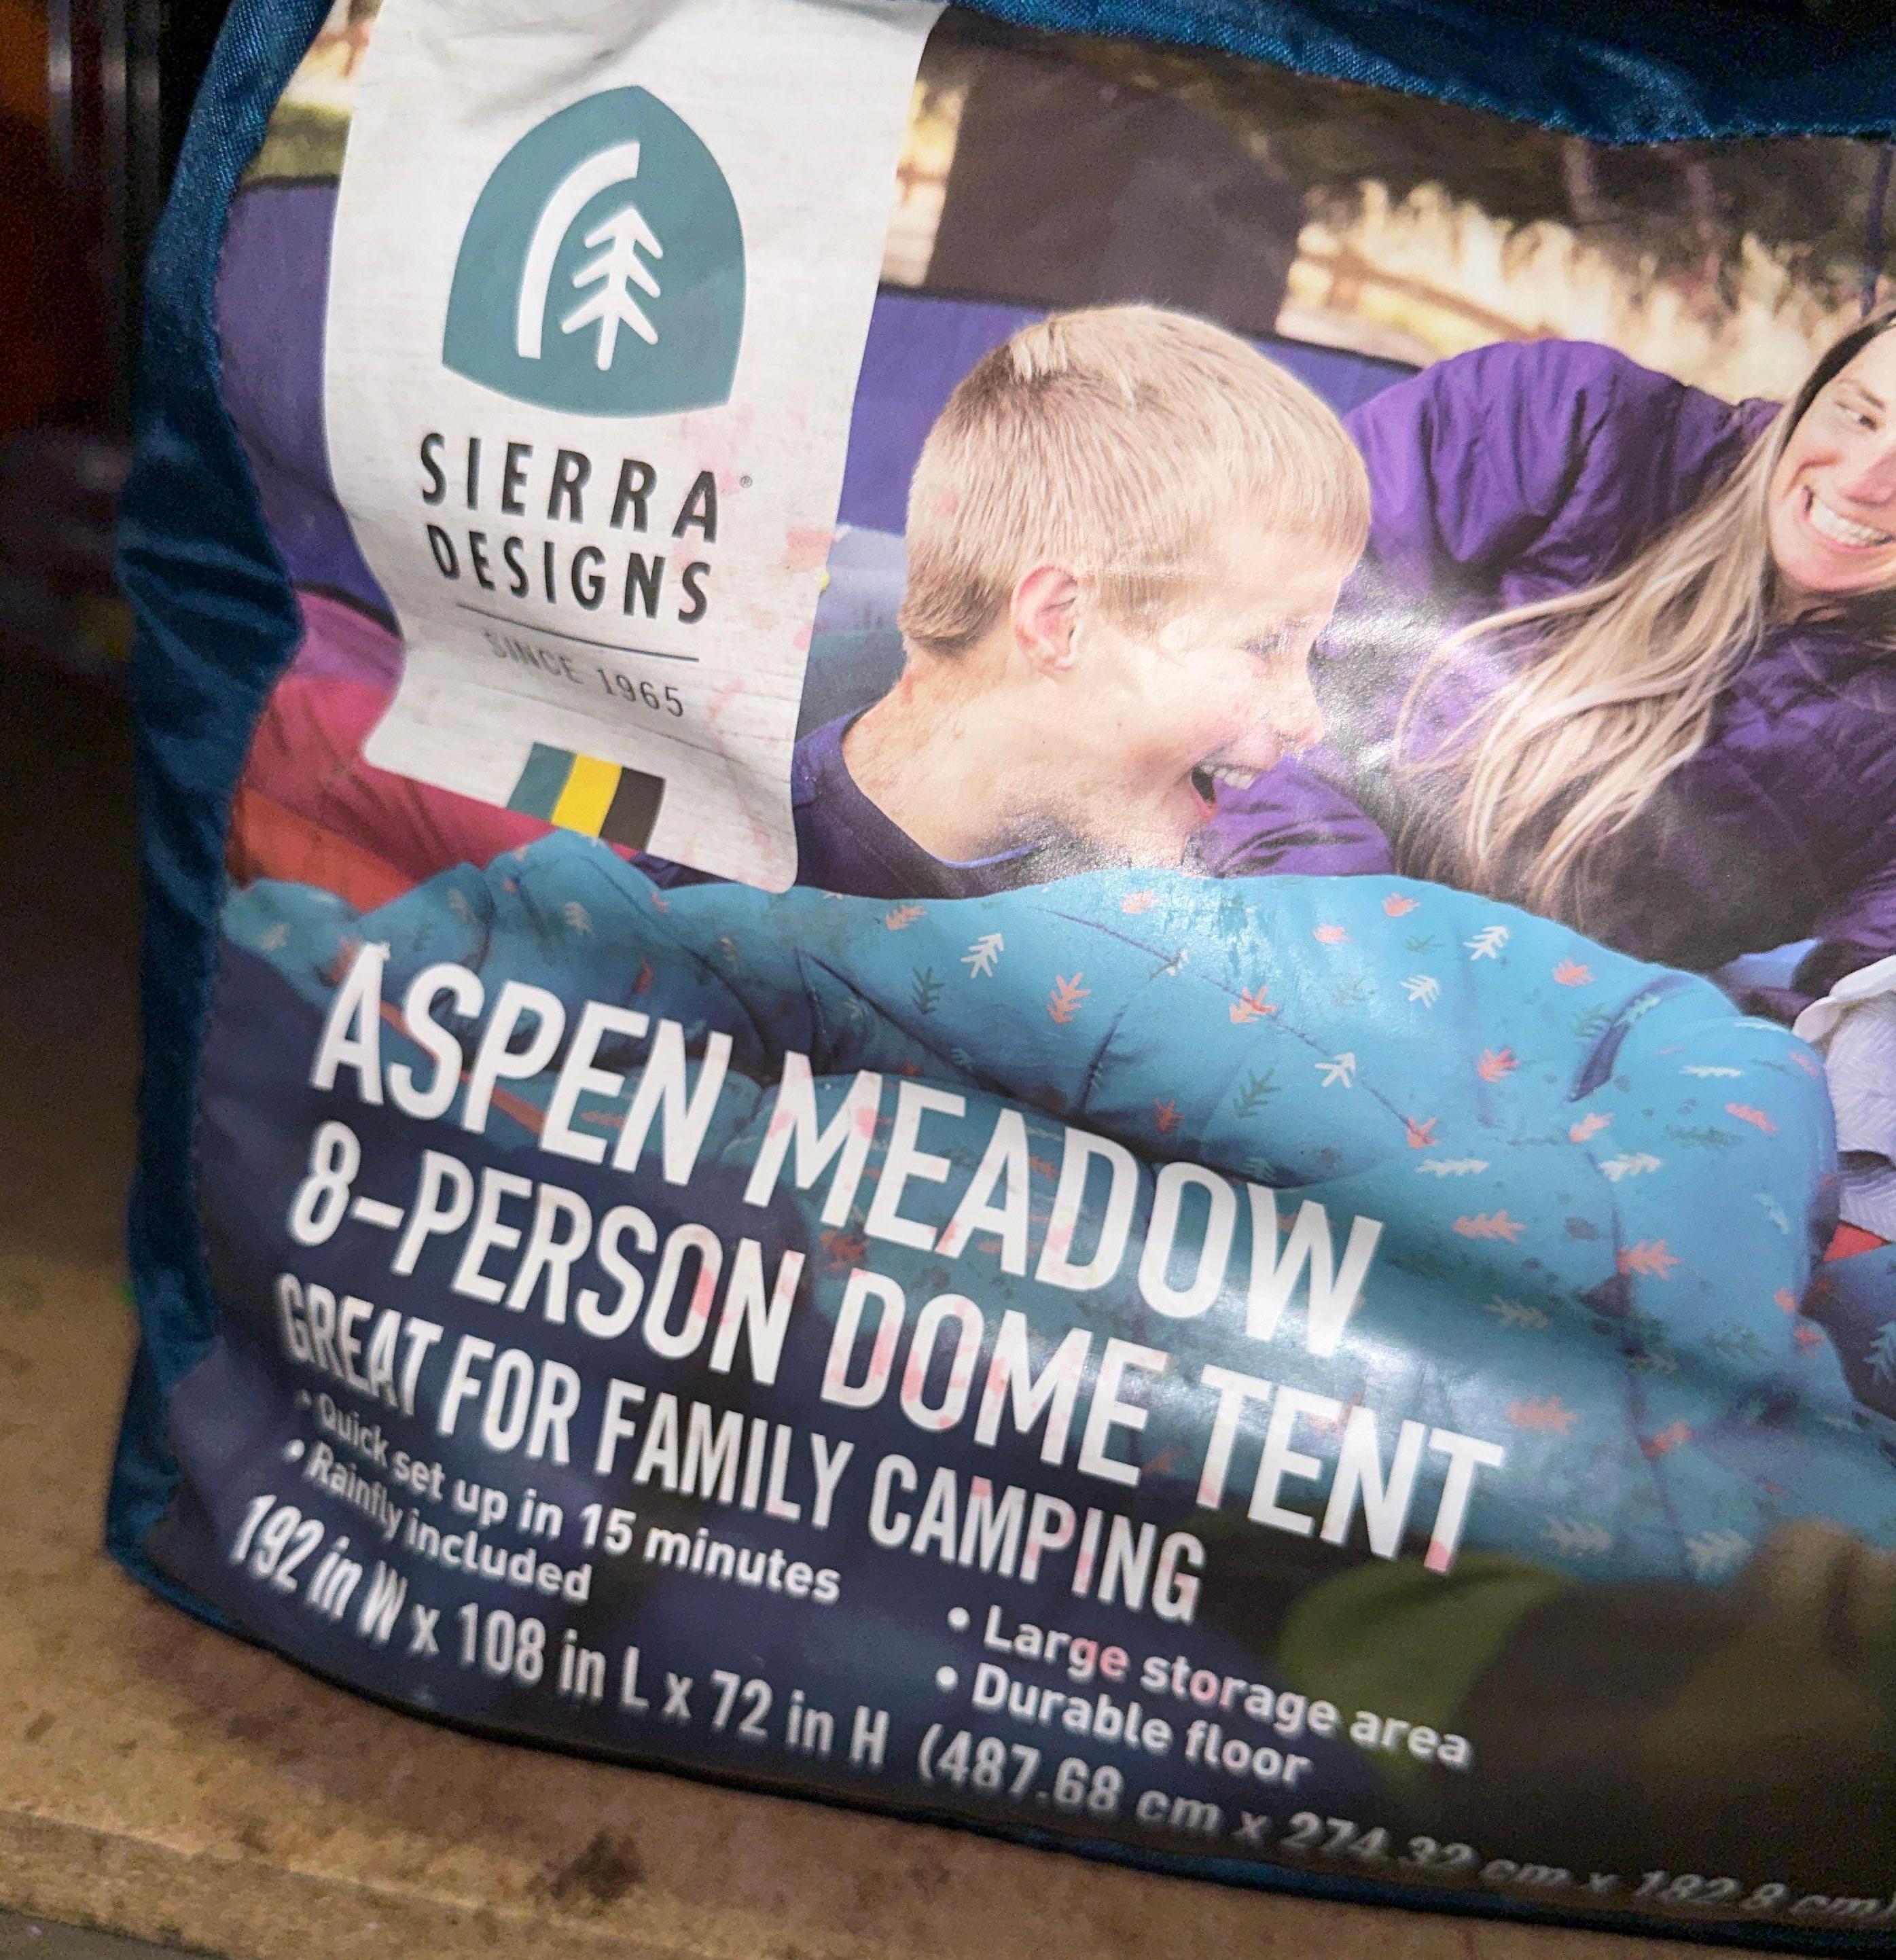 Sierra Designs Aspen Meadow 8 person Dome Tent | Proxibid